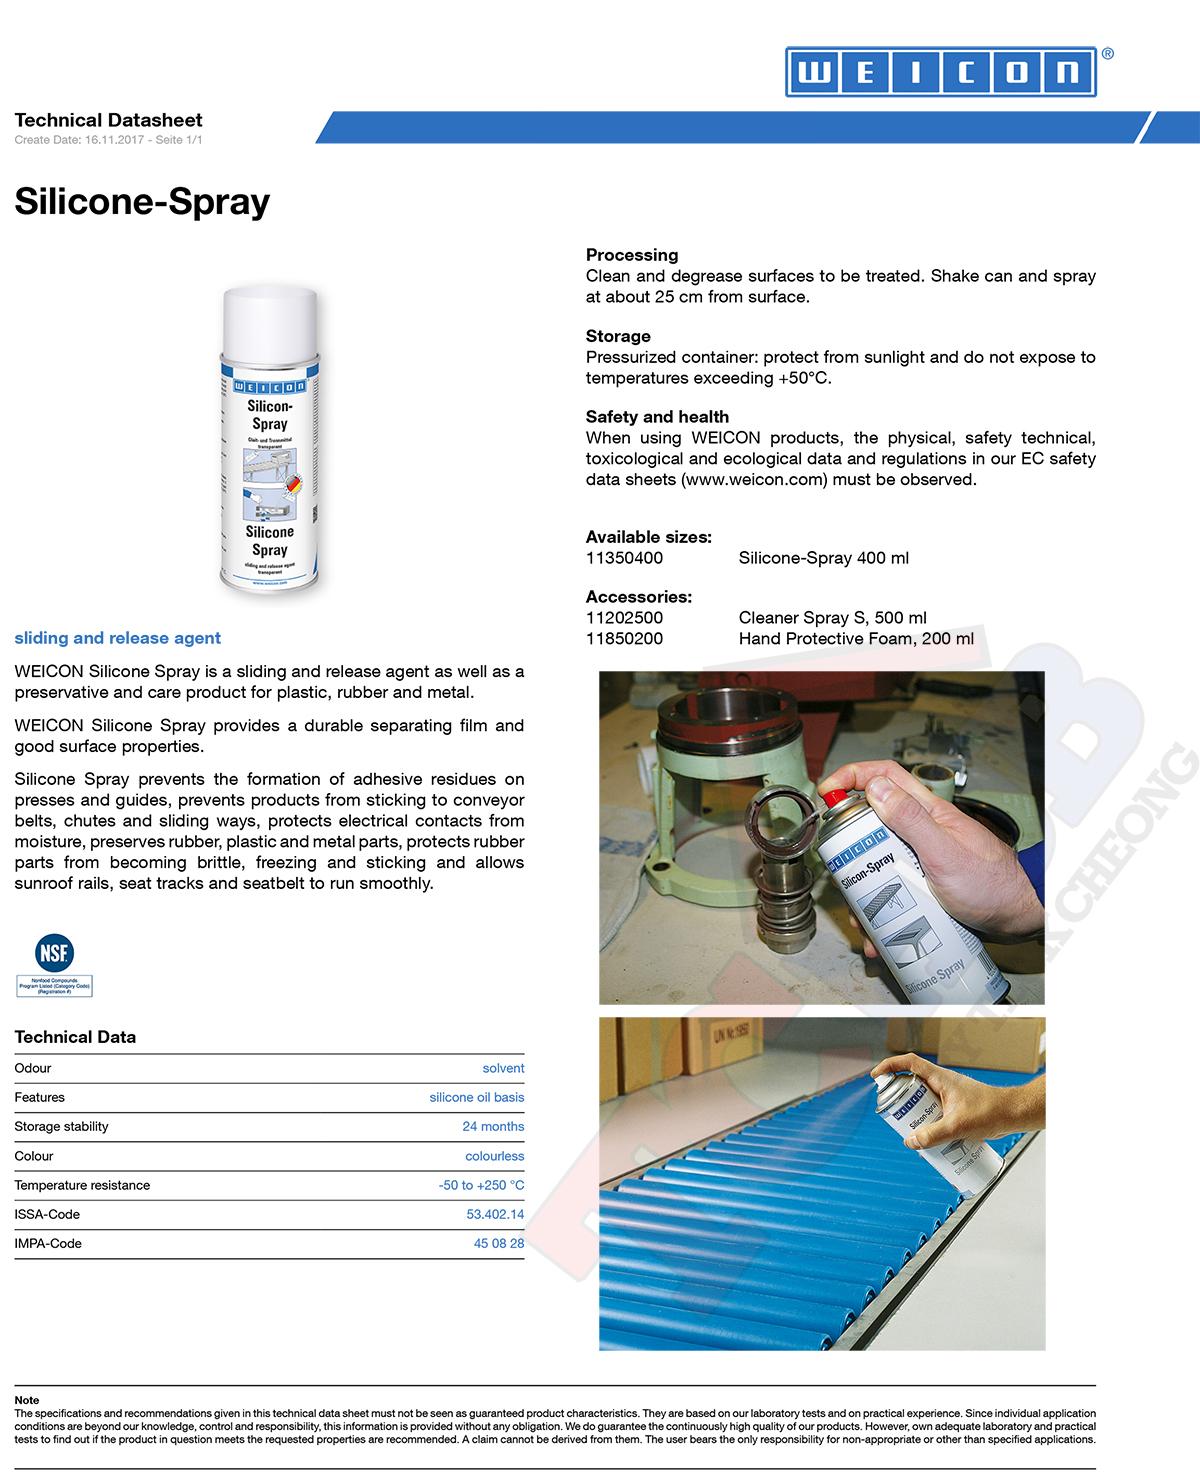 silicone spray.jpg